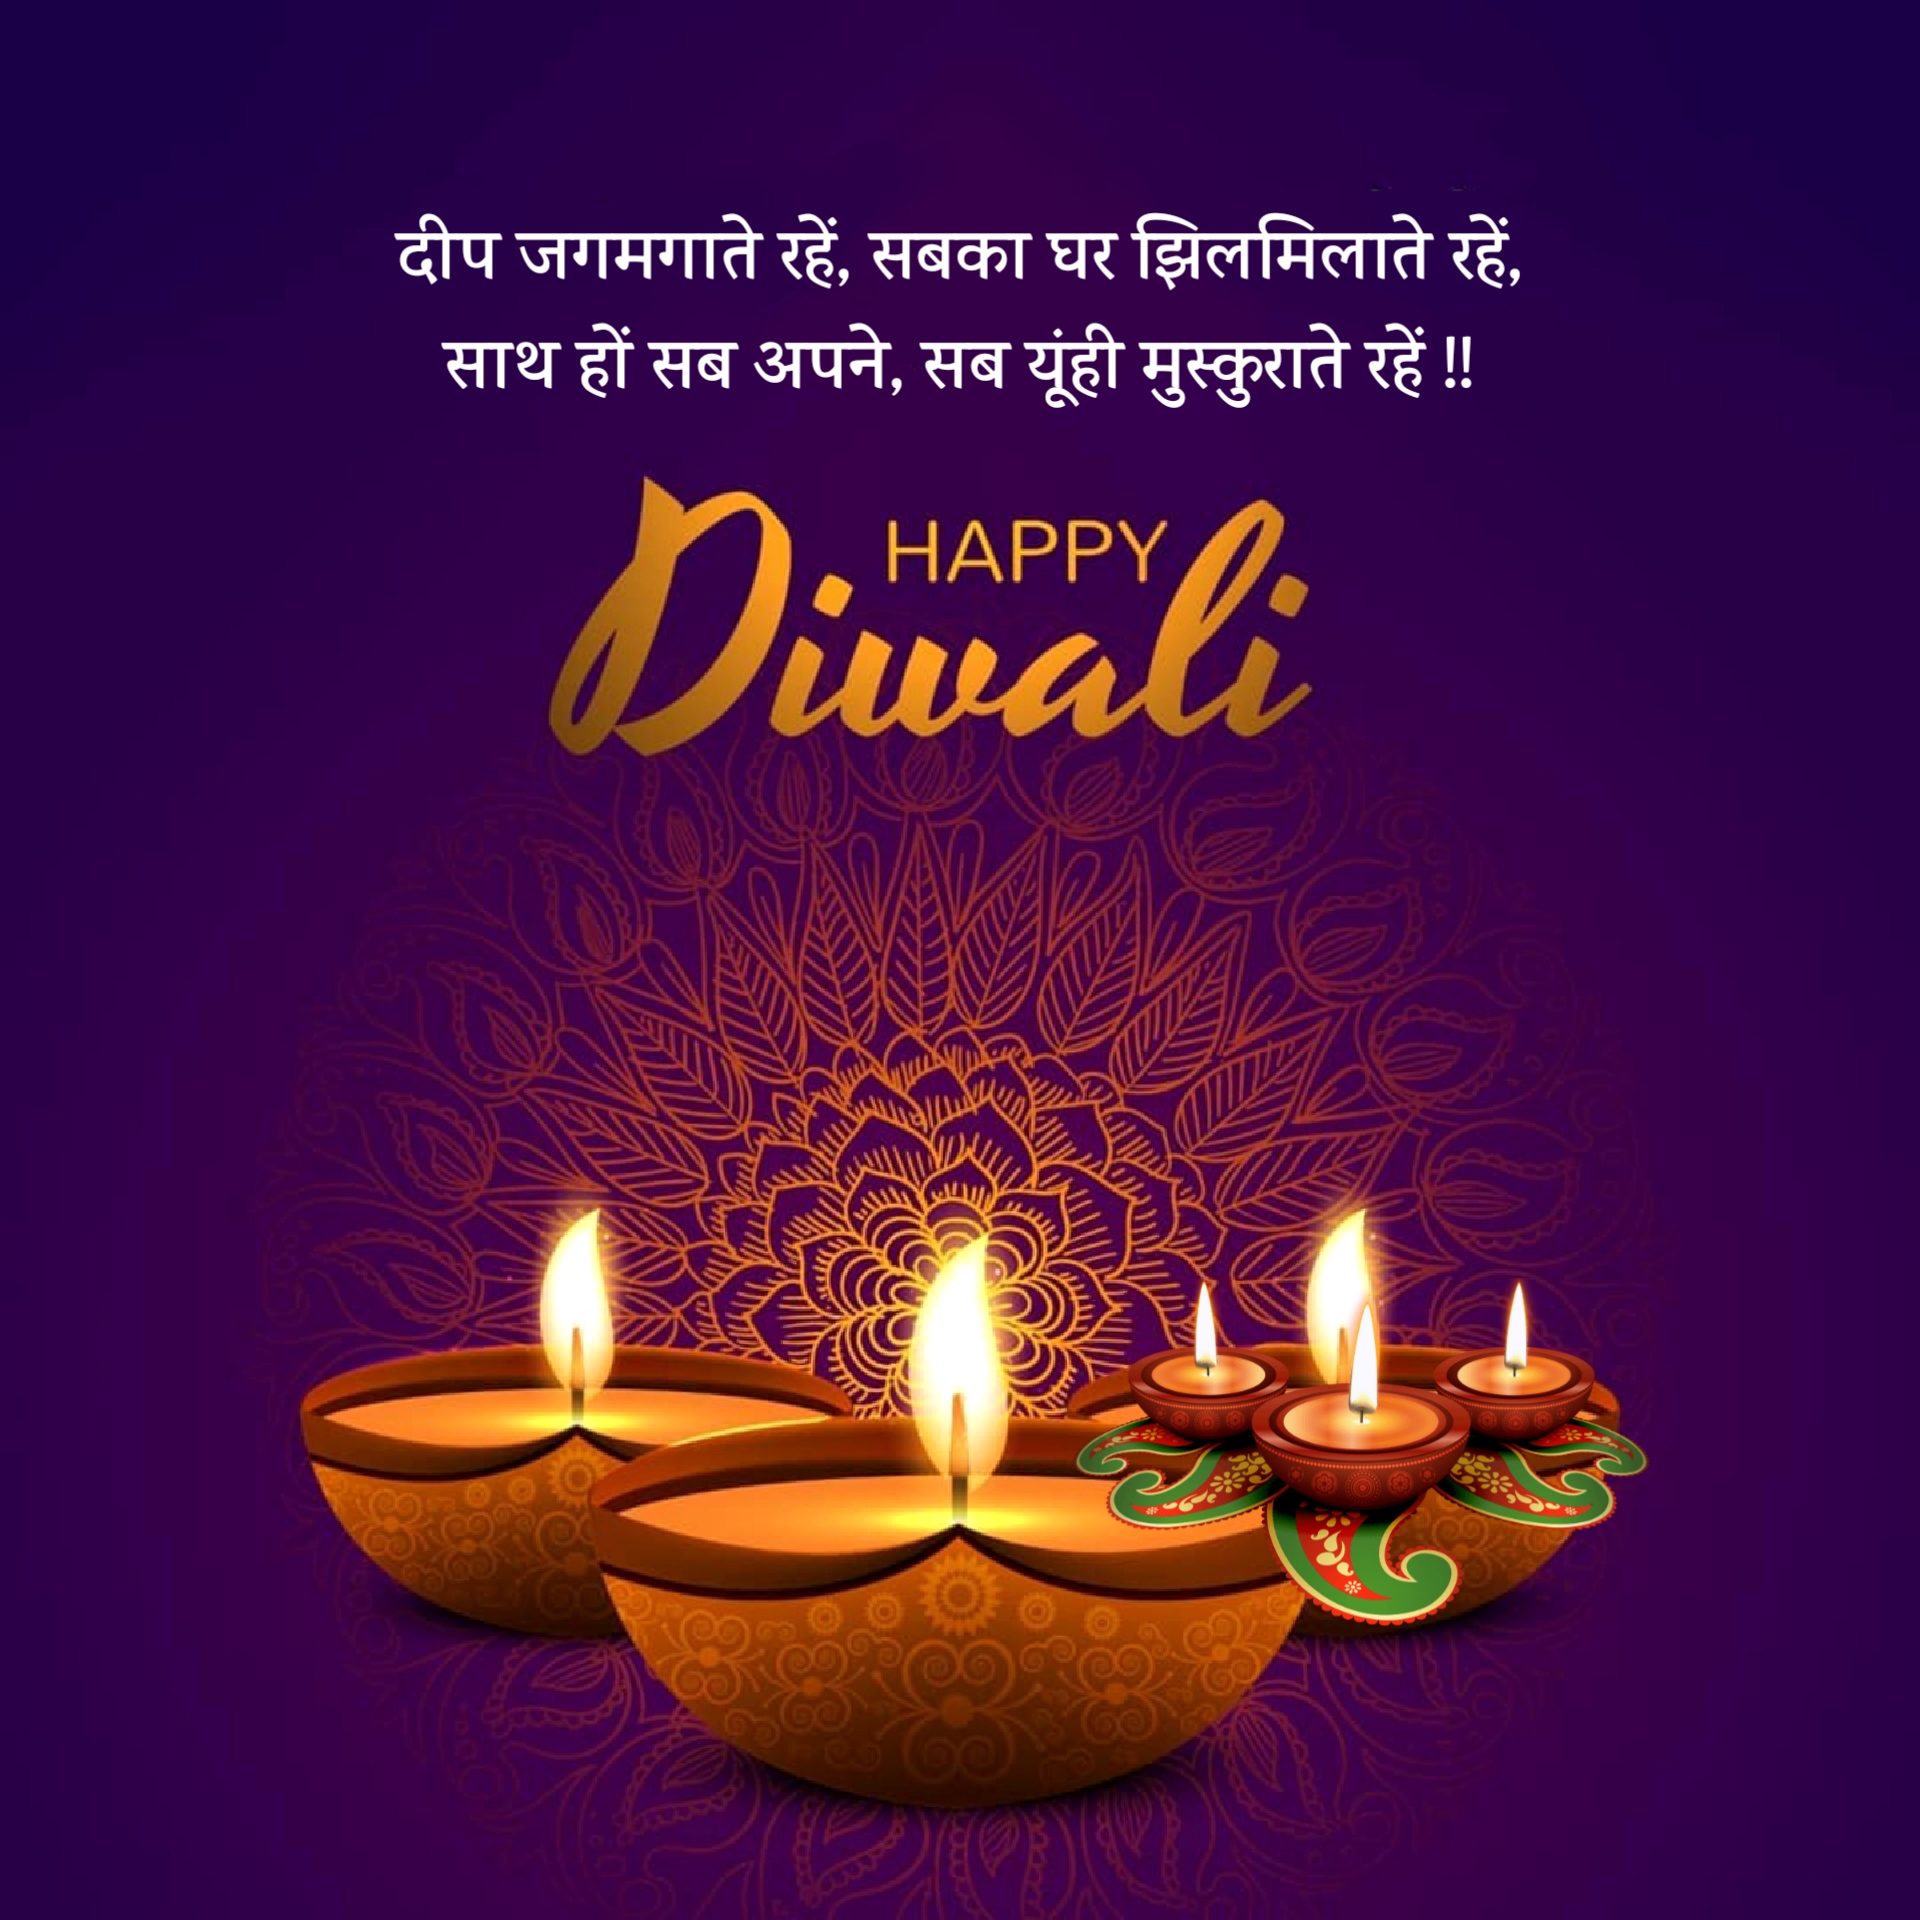 Hindi Diwali Images